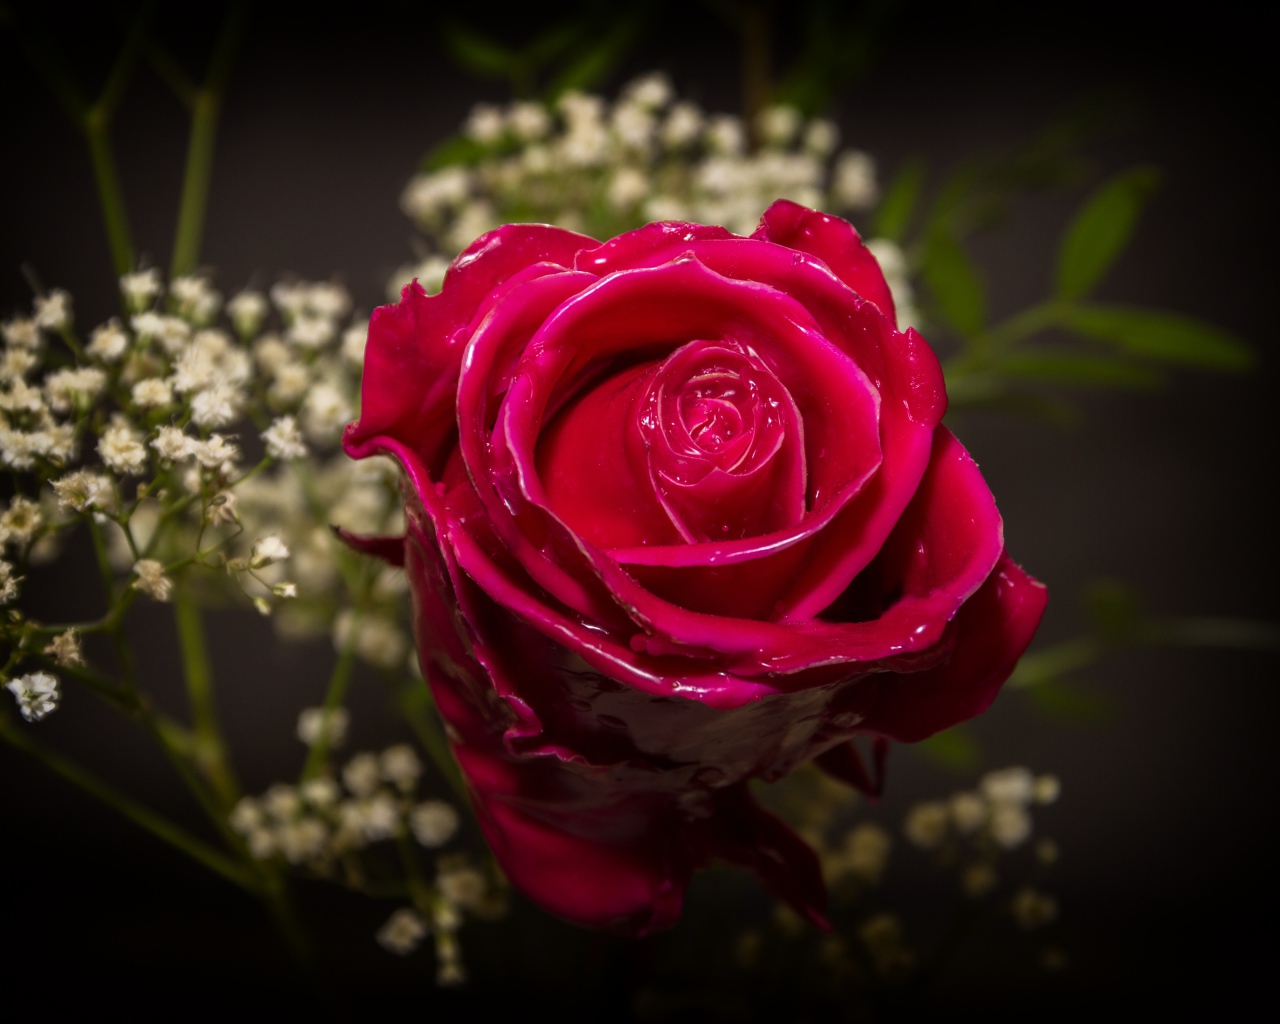 Красивая мокрая красная роза с белыми цветами